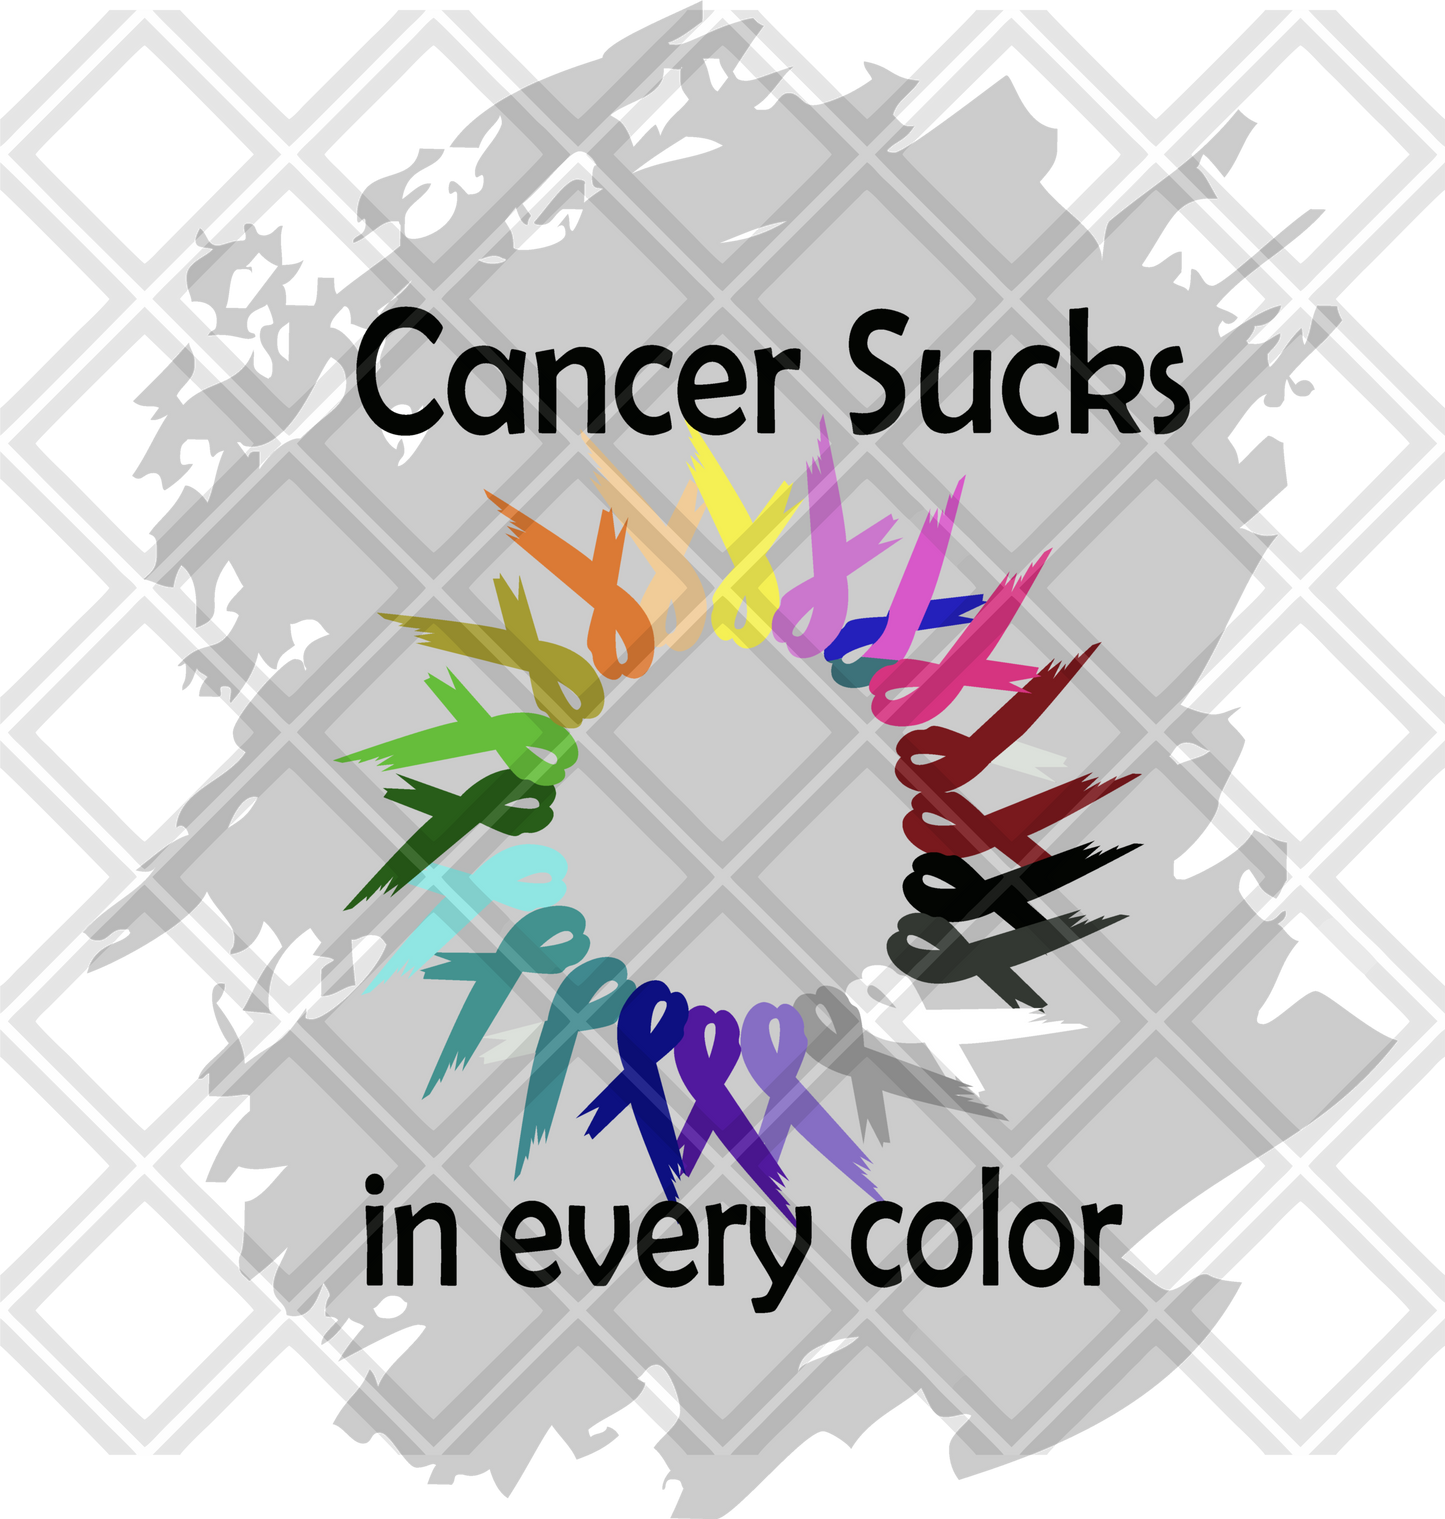 CANCER SUCKS IN EVERY COLOR FRAME Digital Download Instand Download